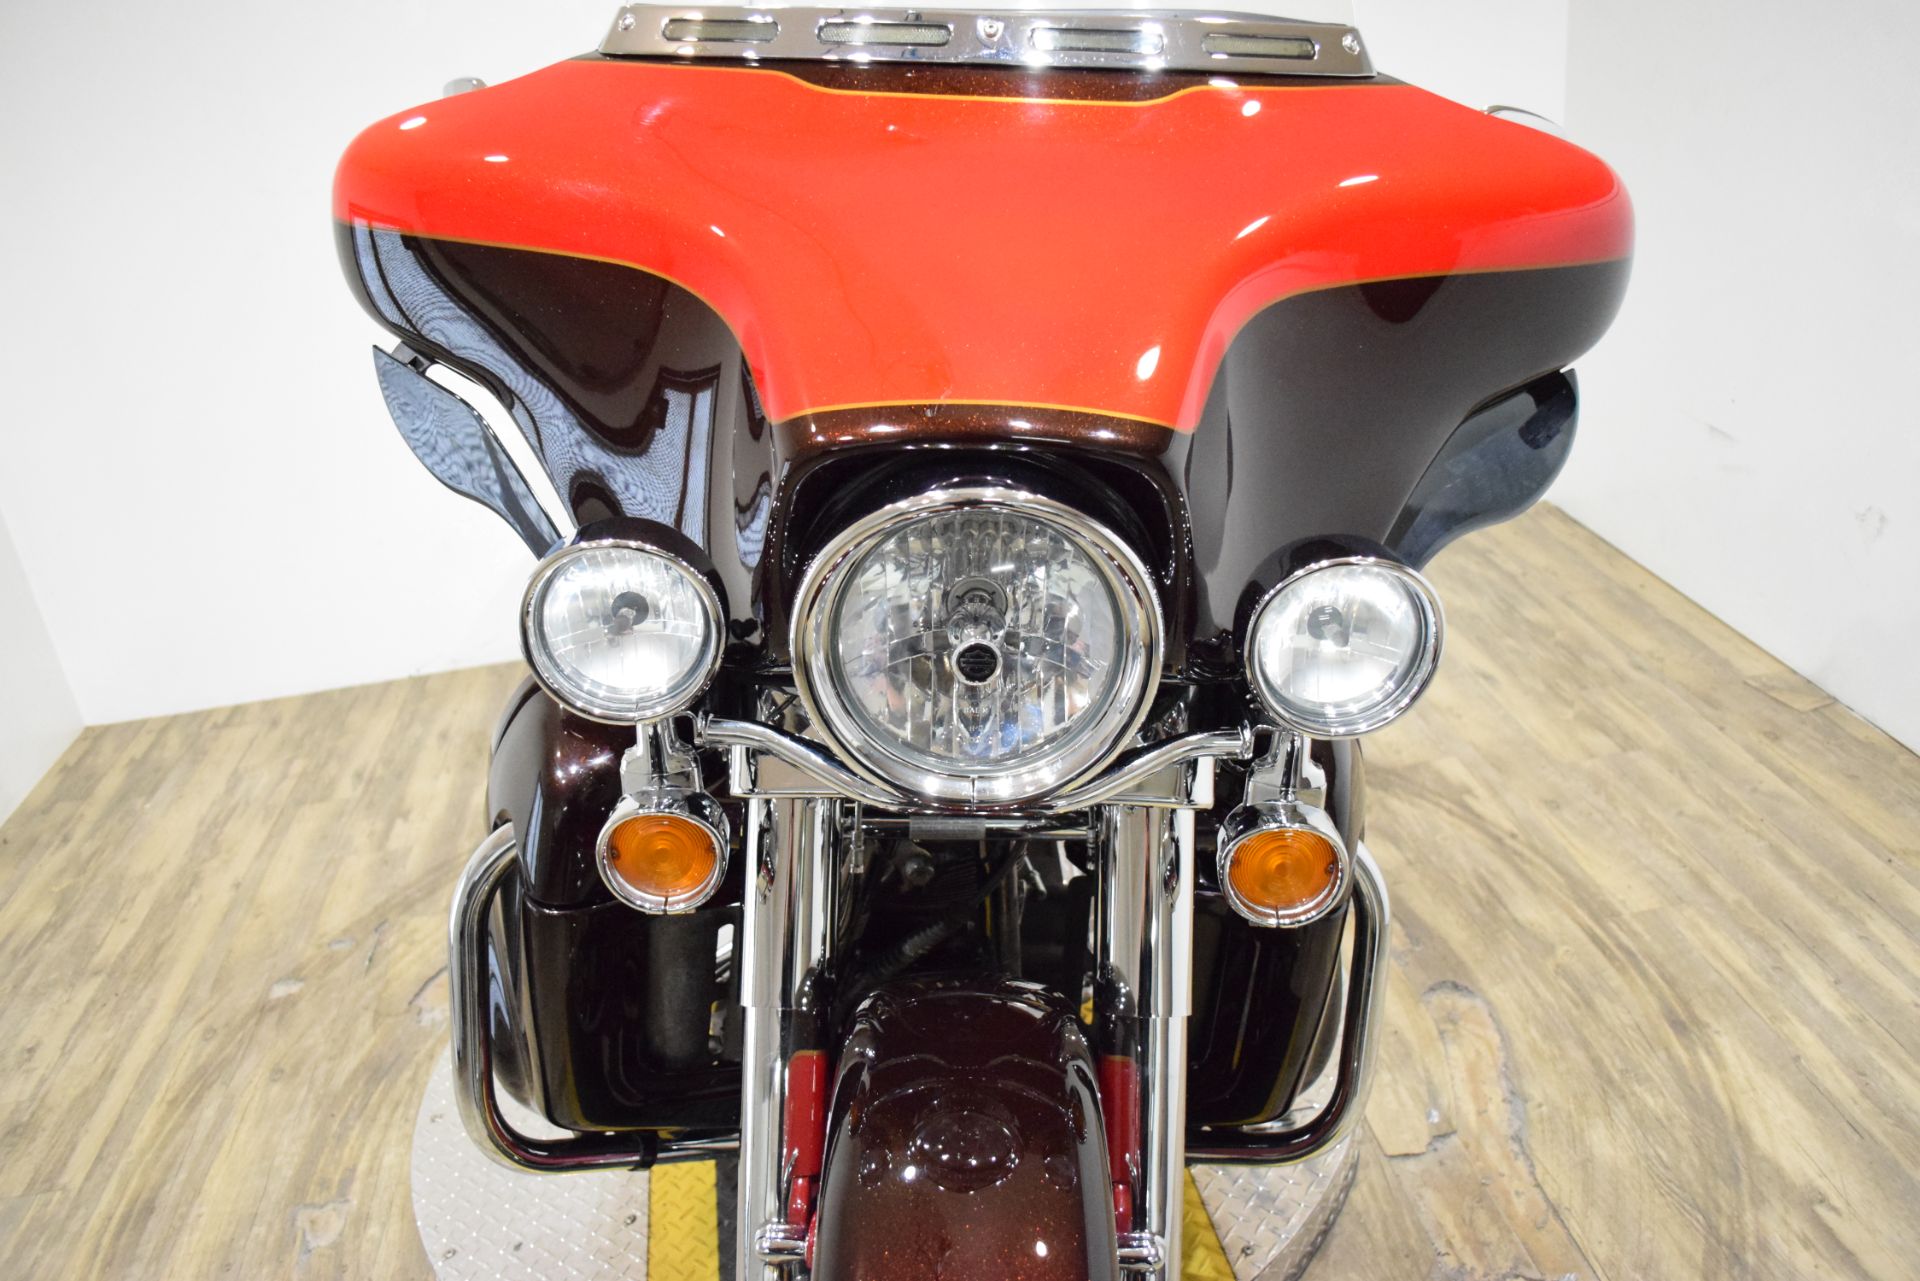 2010 Harley-Davidson Ultra Classic® Electra Glide® in Wauconda, Illinois - Photo 12